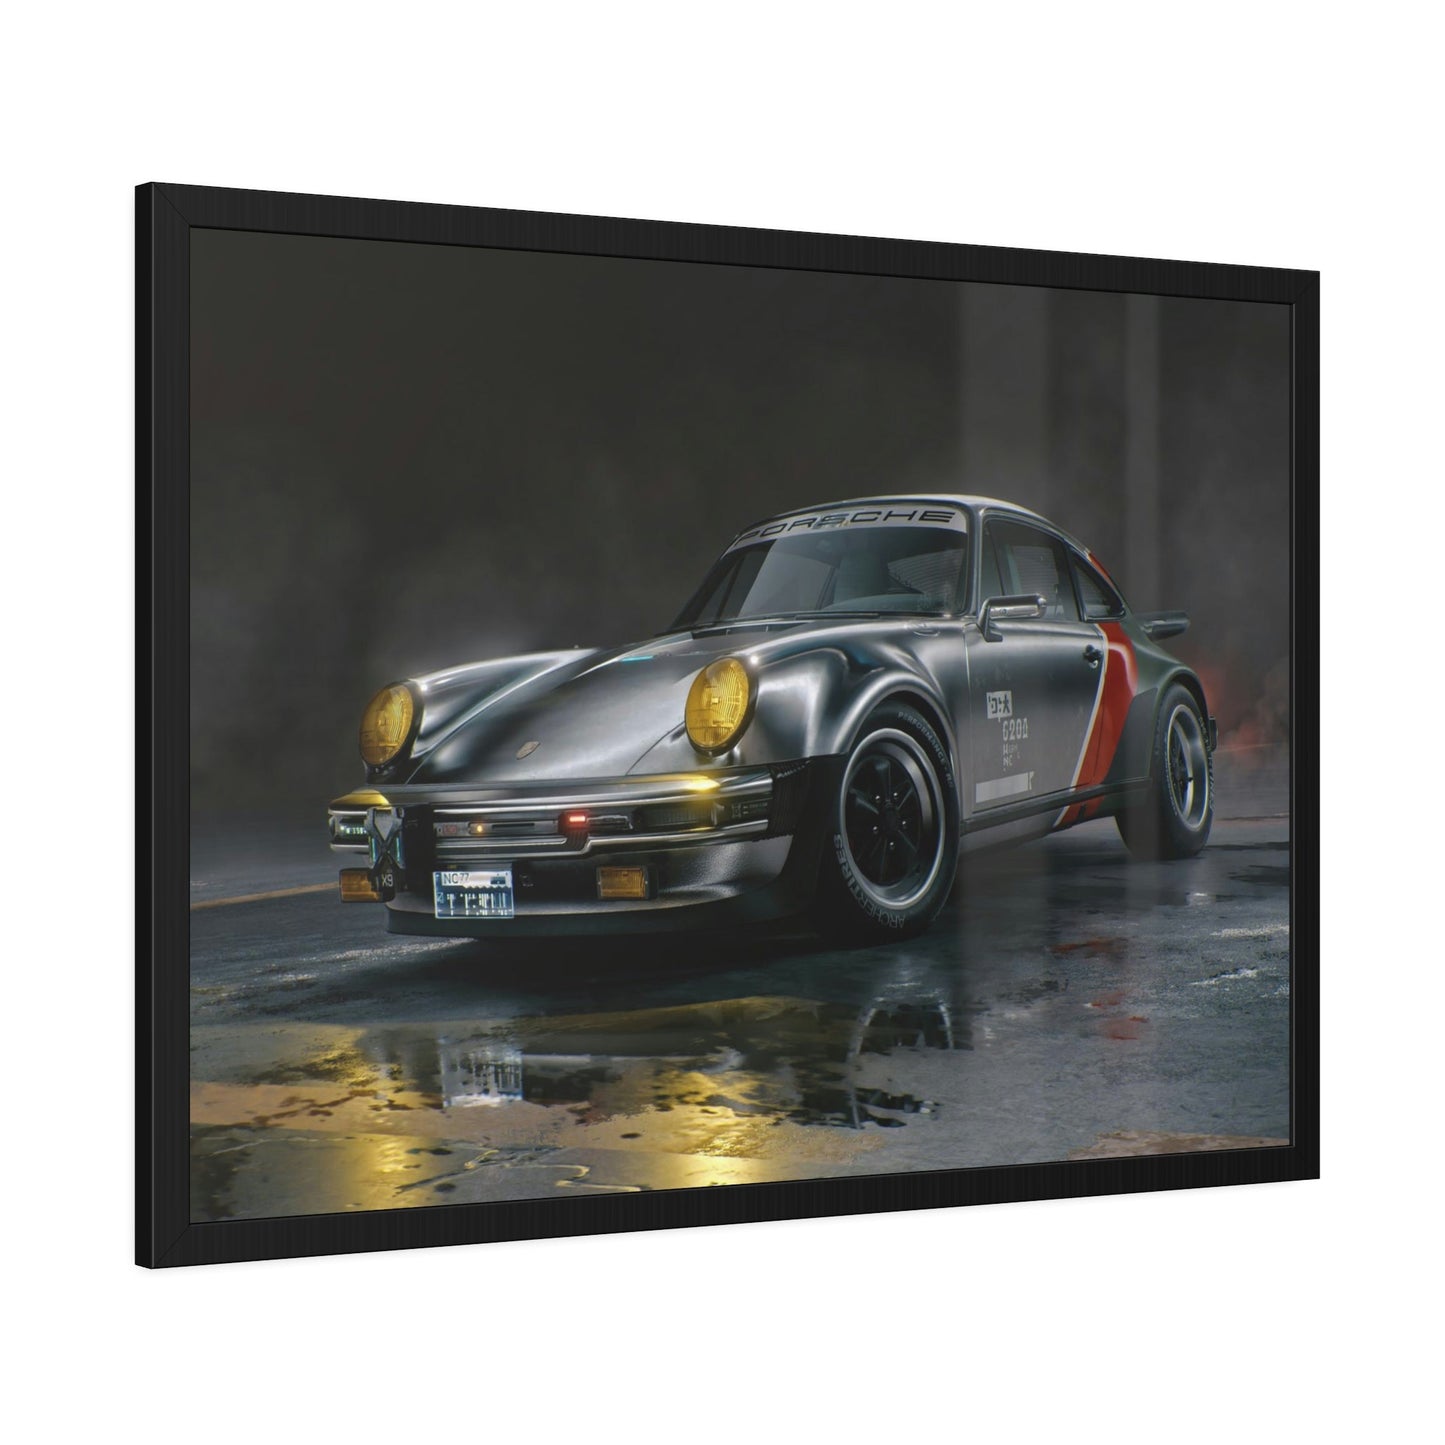 Porsche: Stunning Canvas and Print Artwork of High-Performance Cars